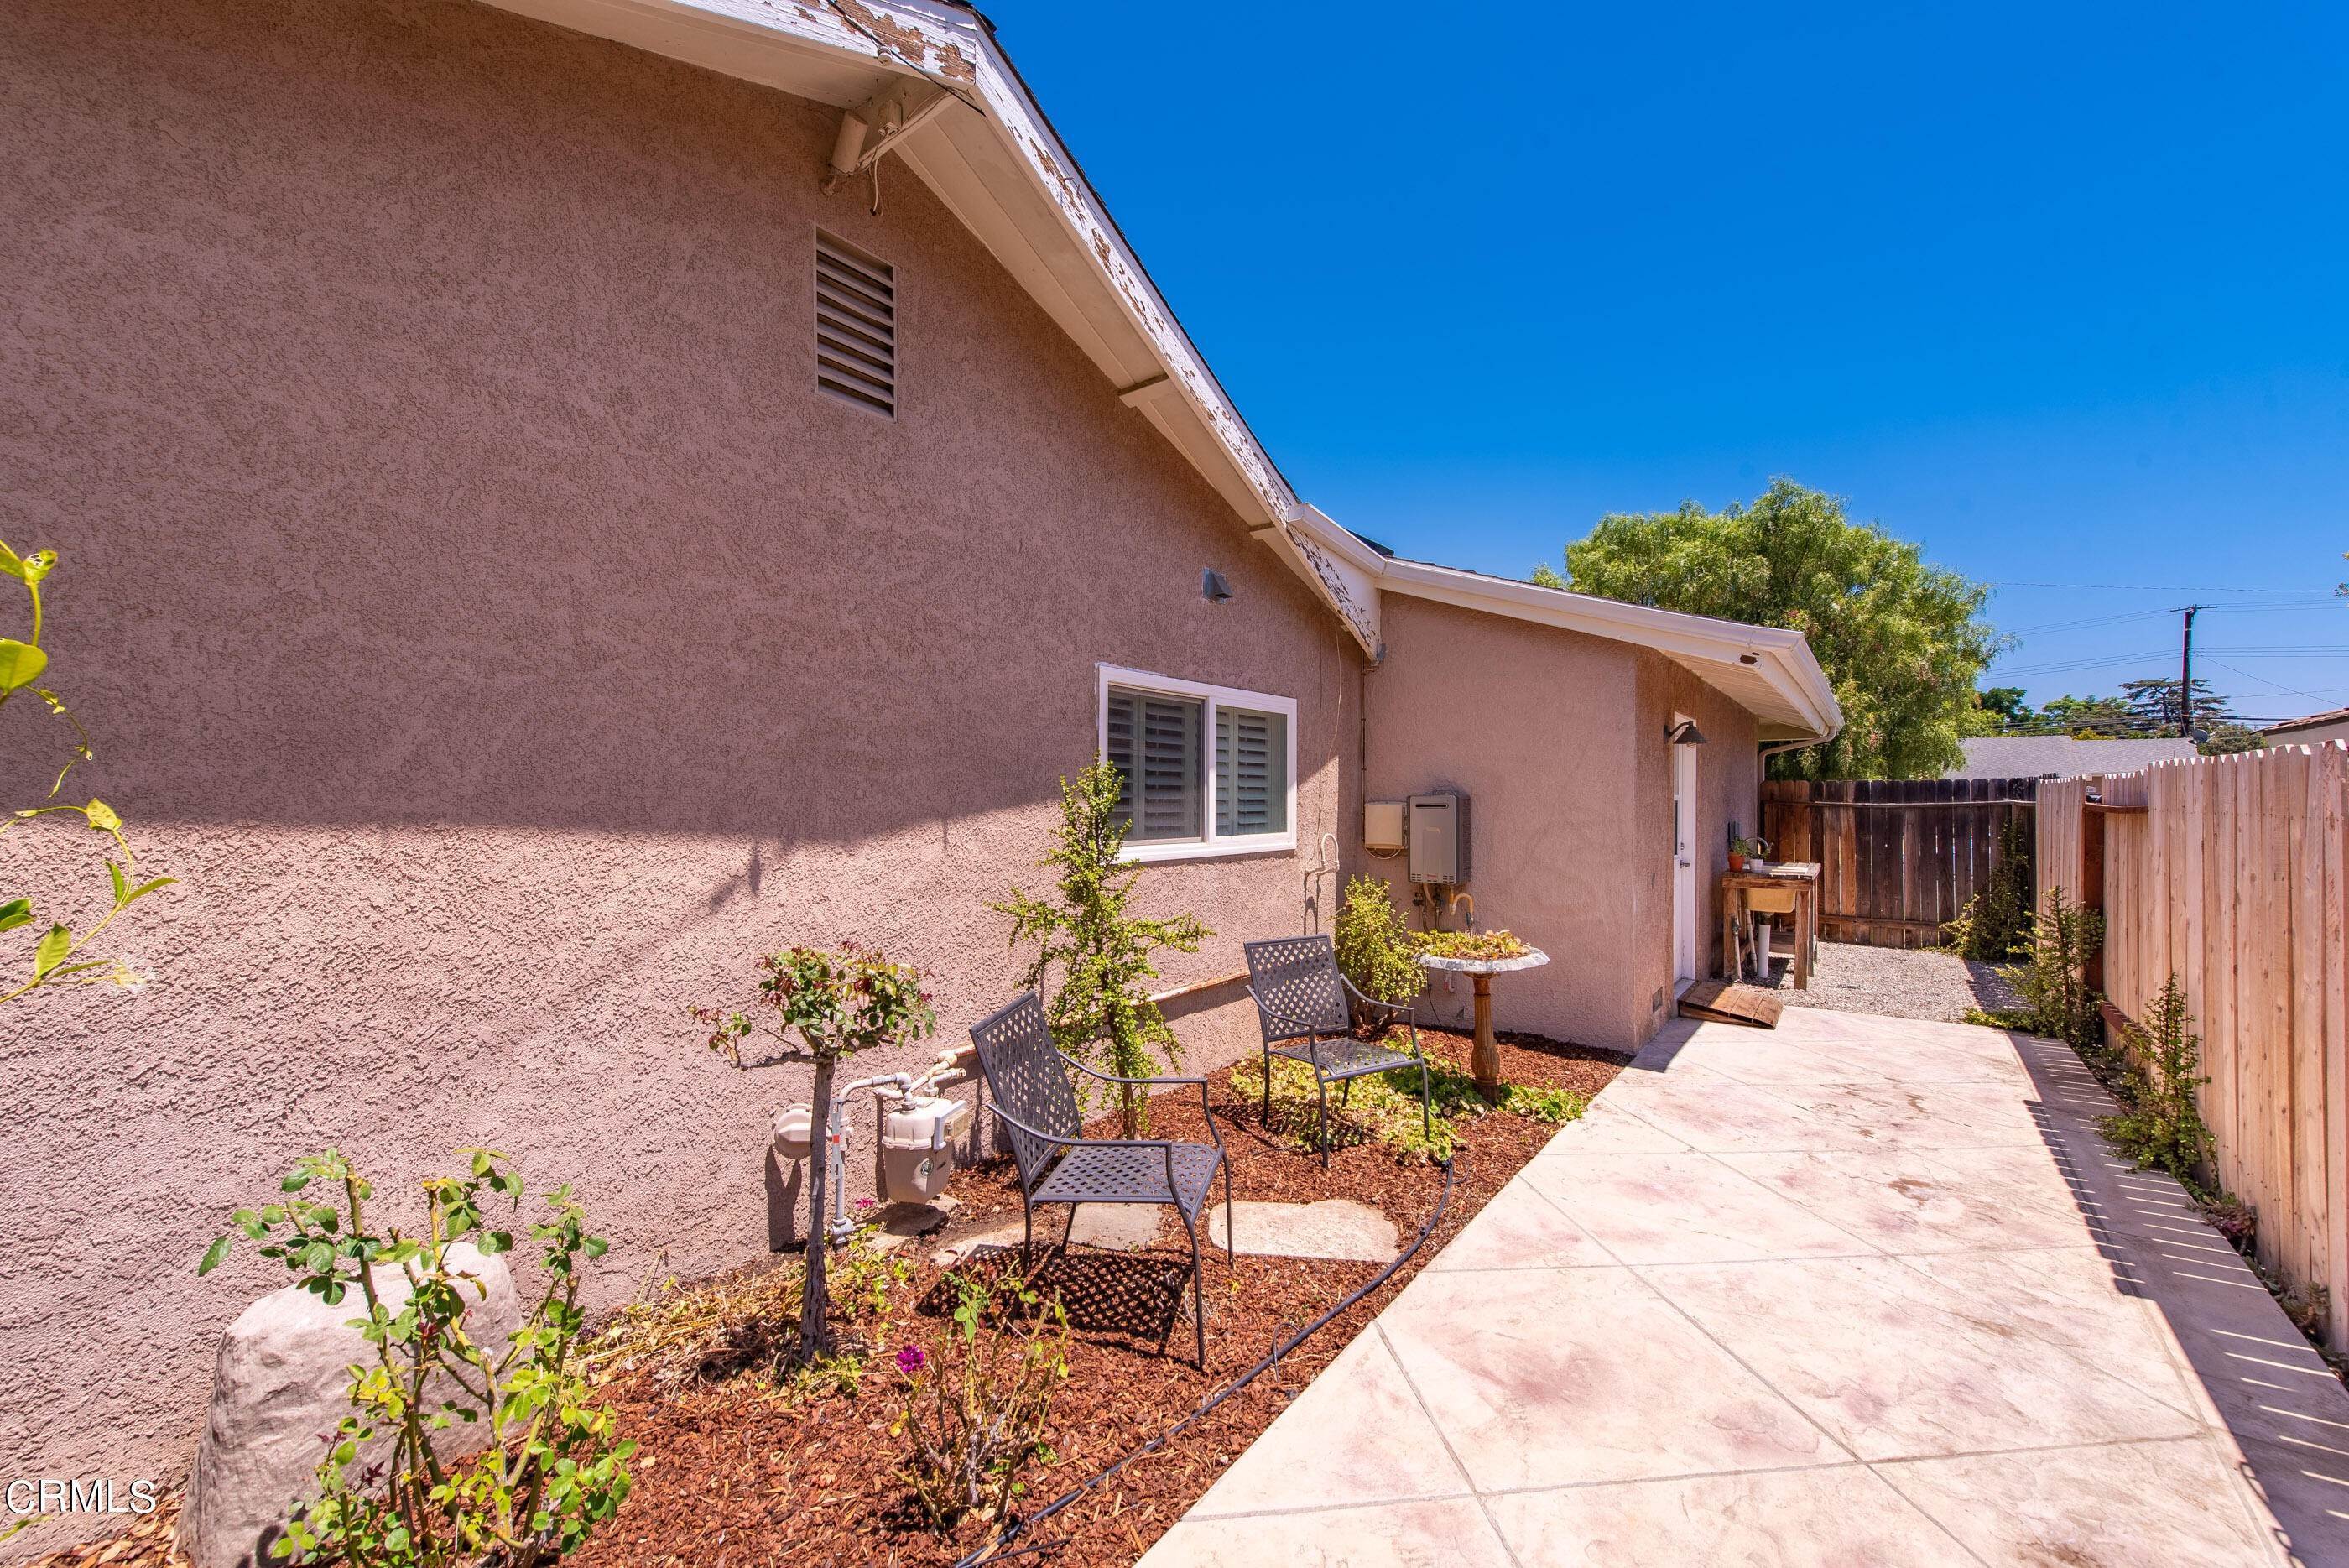 46. Single Family Homes for Sale at 1477 Anacapa Drive Camarillo, California 93010 United States